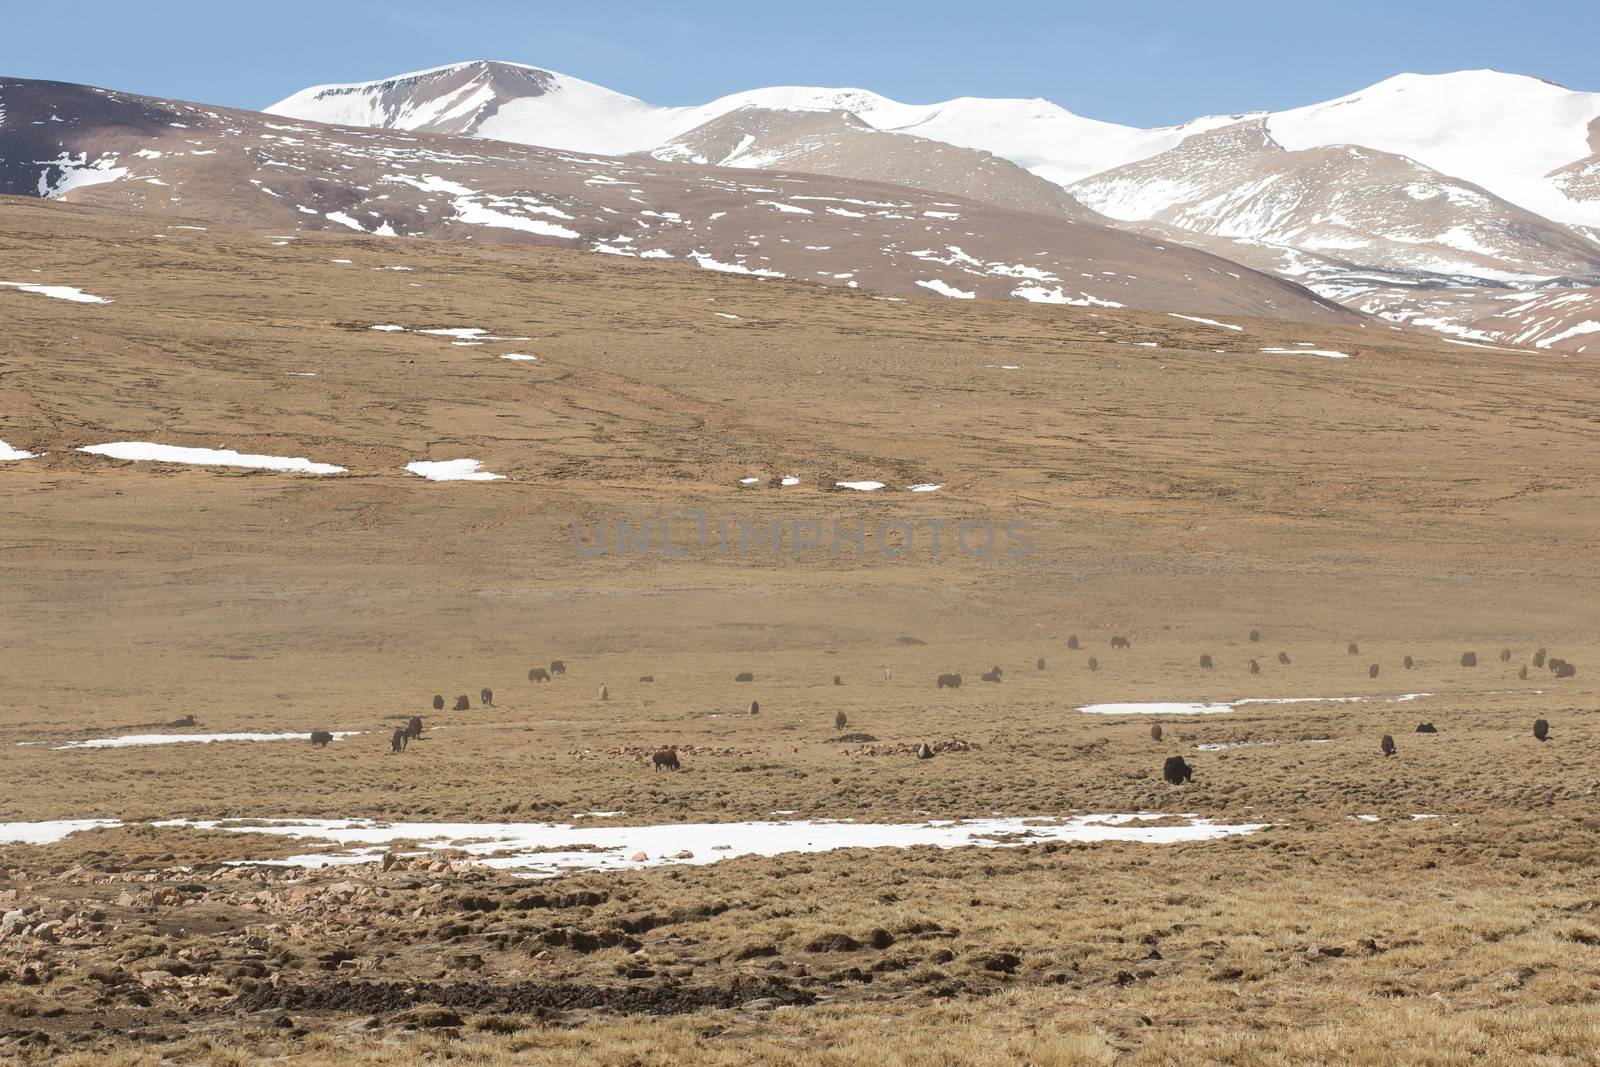 Herd of yaks grazing in the Himalaya on the Friendship Road going to Kathmandu, Tibet, China